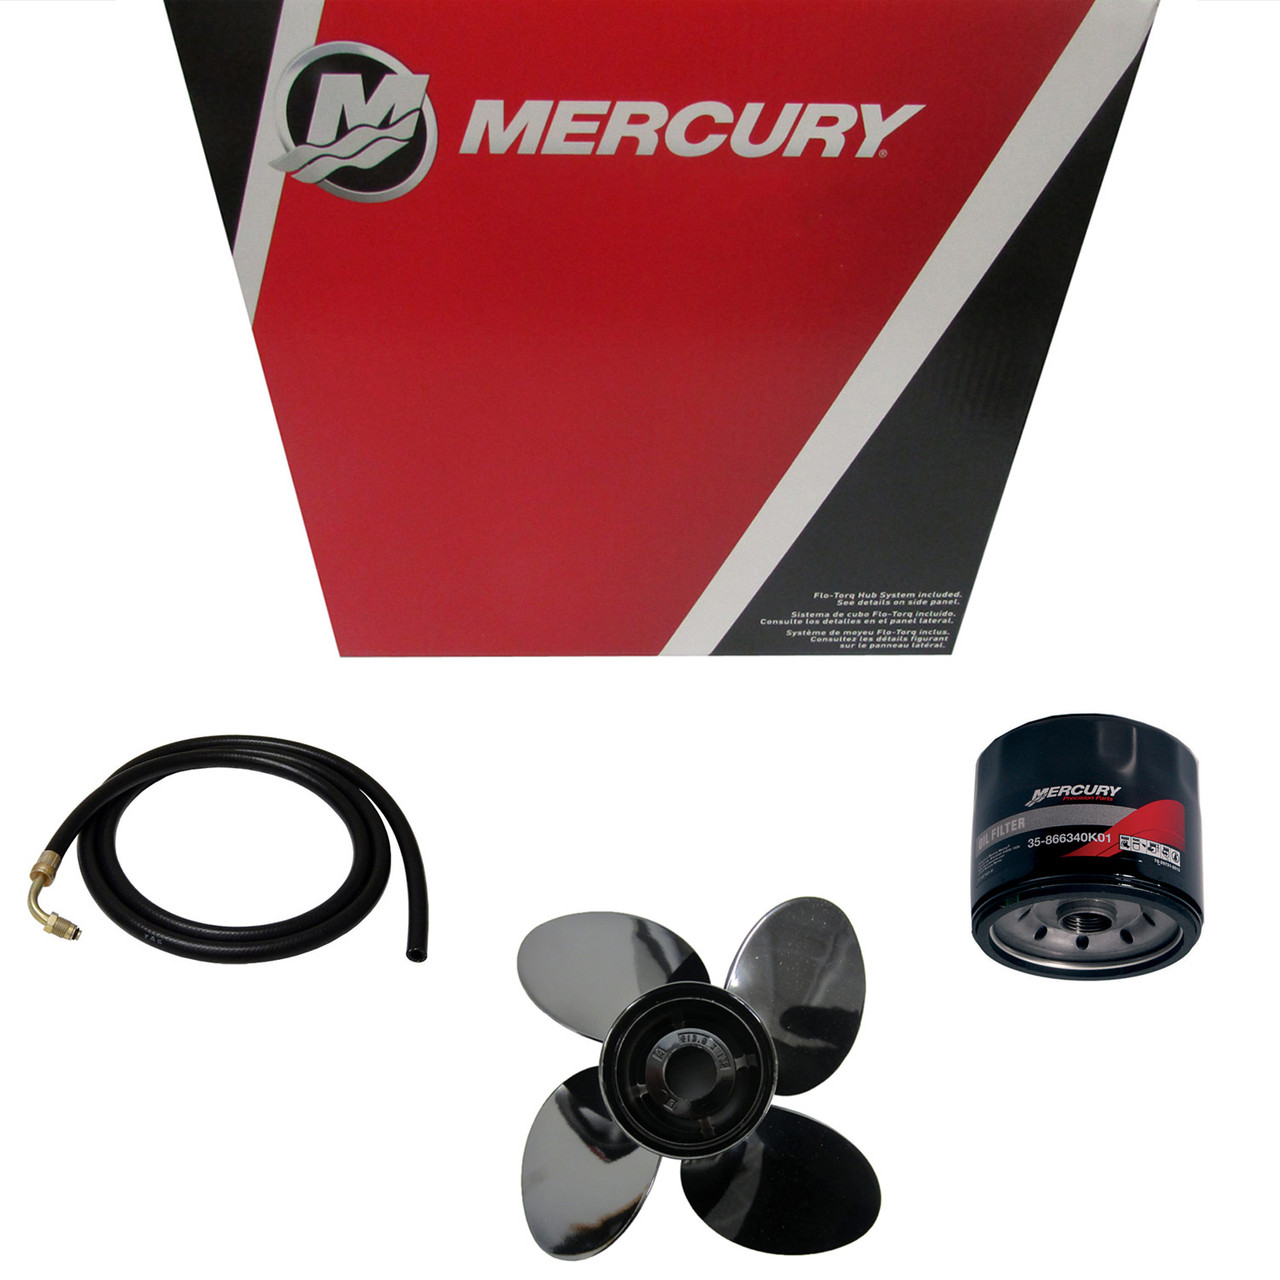 Mercury Marine / Mercruiser New OEM Ecm Boxed, 865830T08